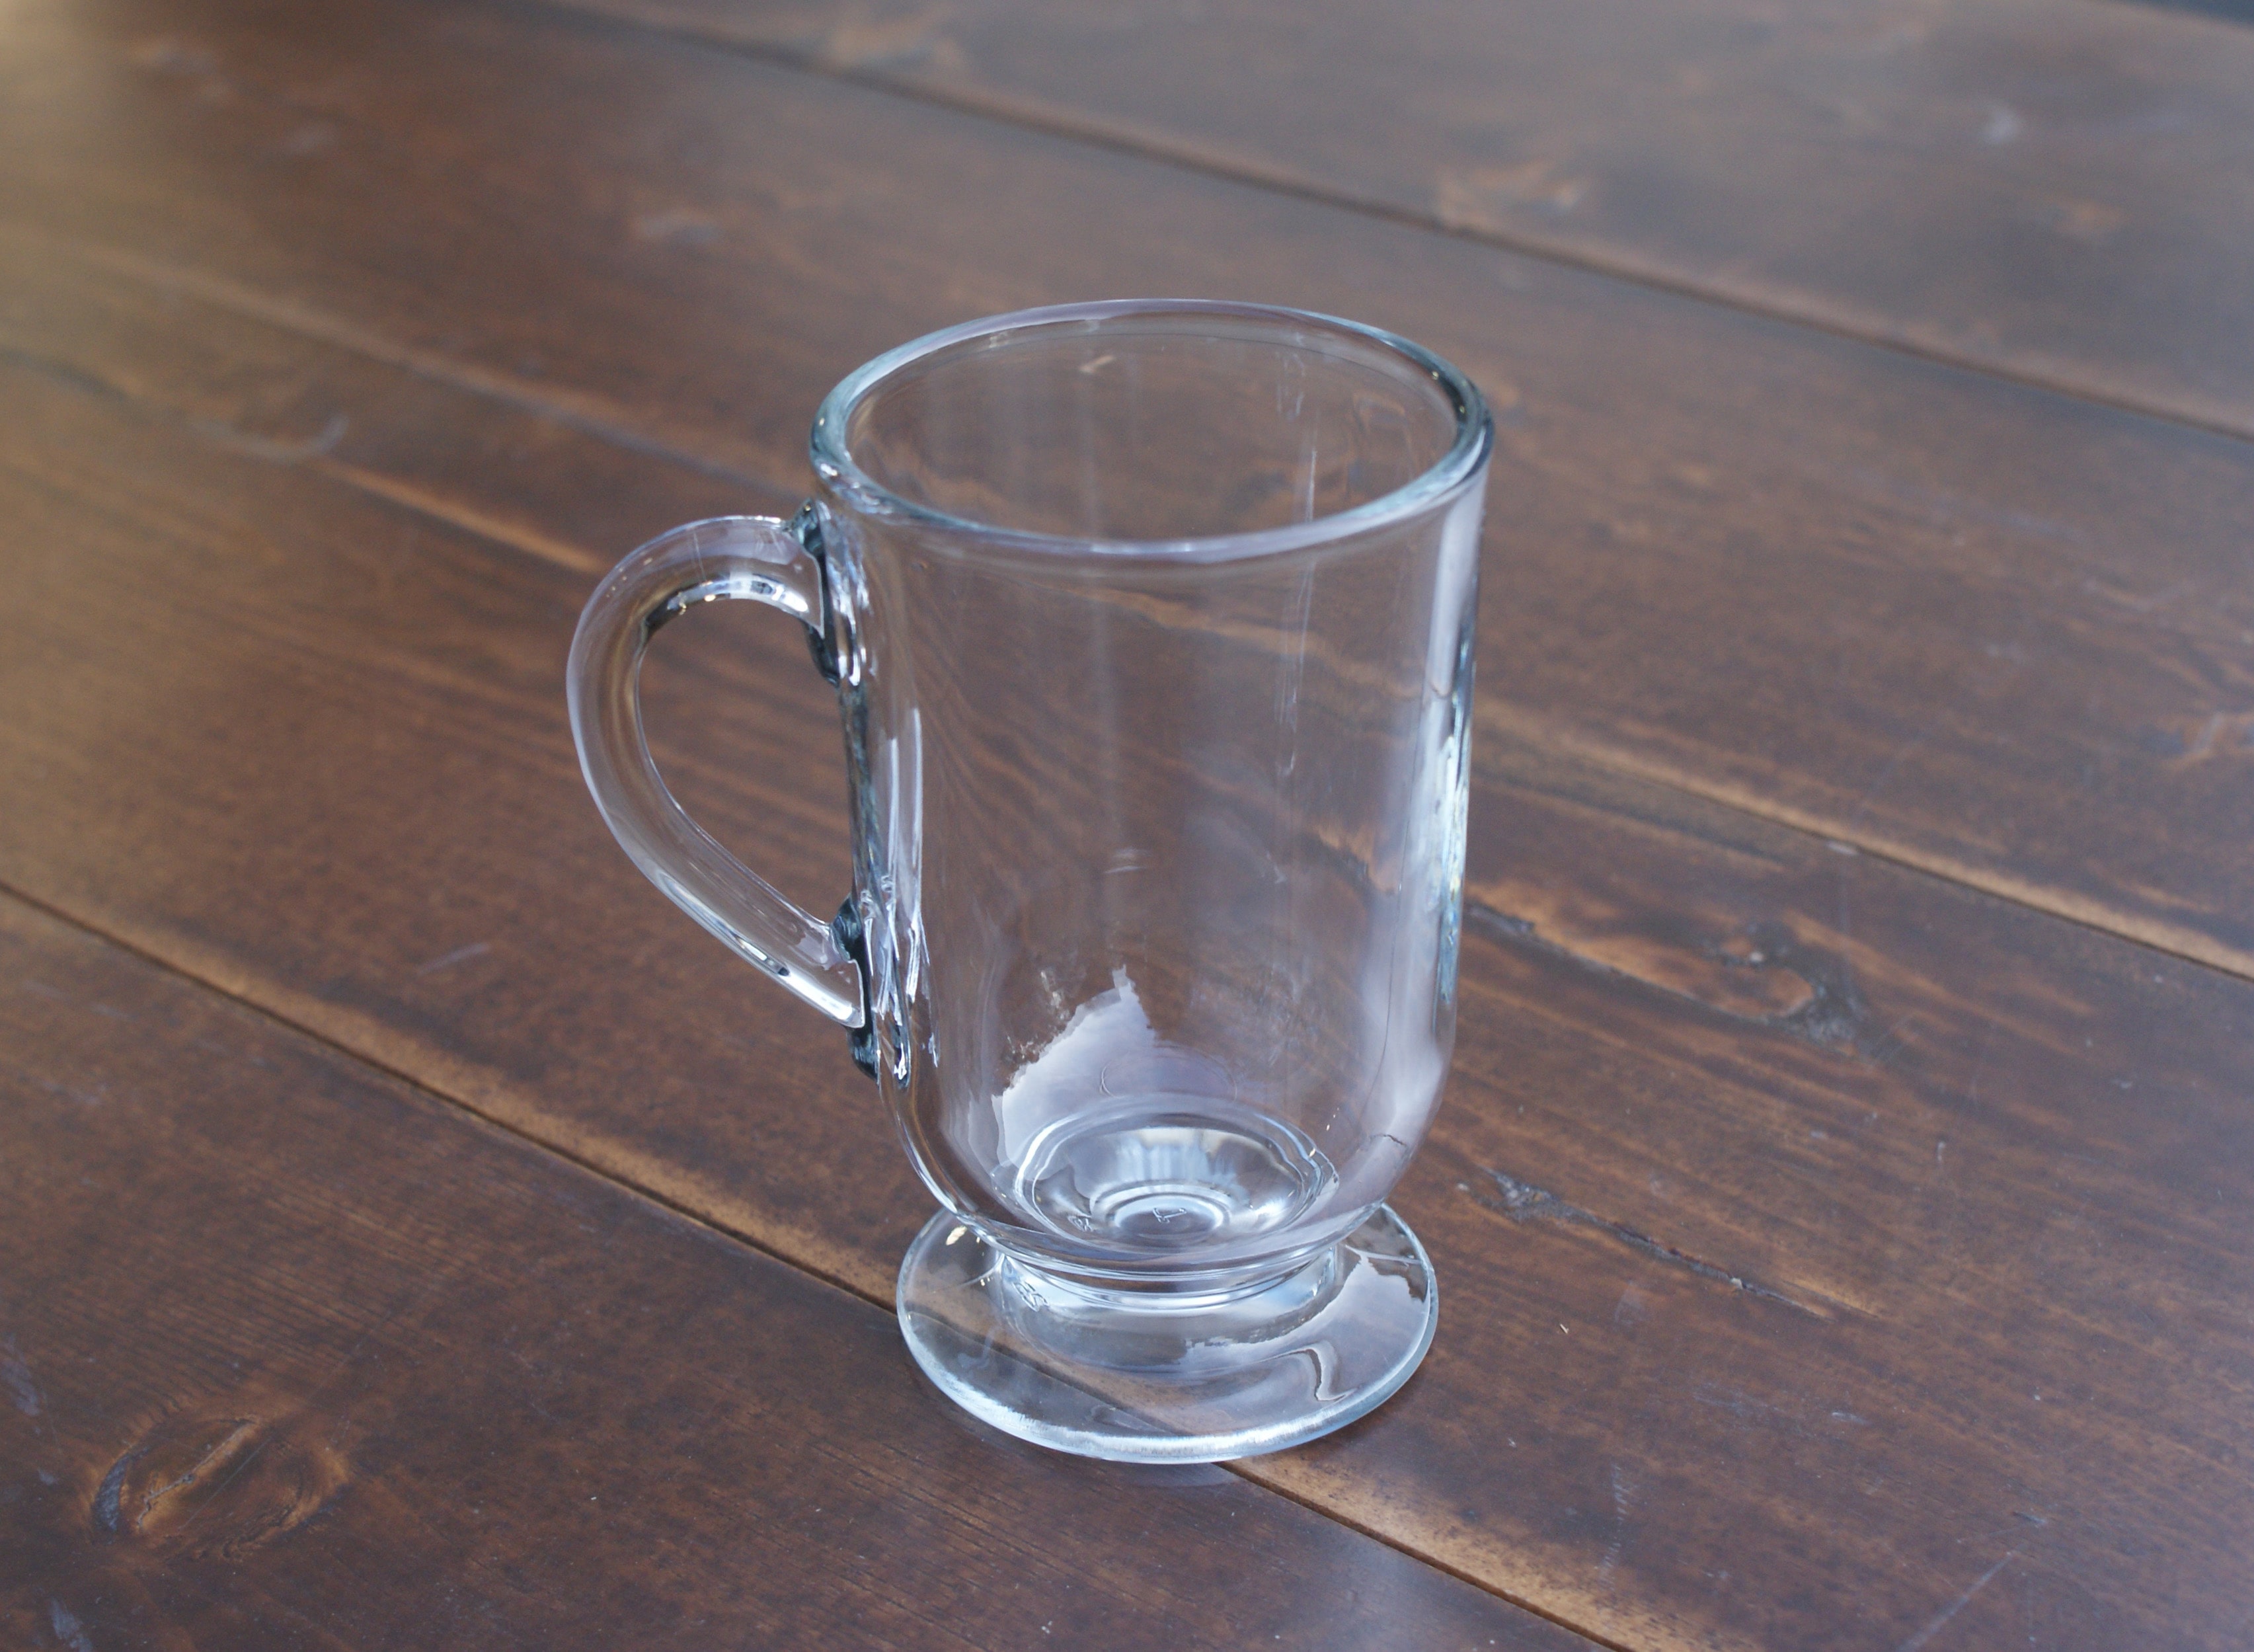 empty glass Irish coffee mug on a wood table